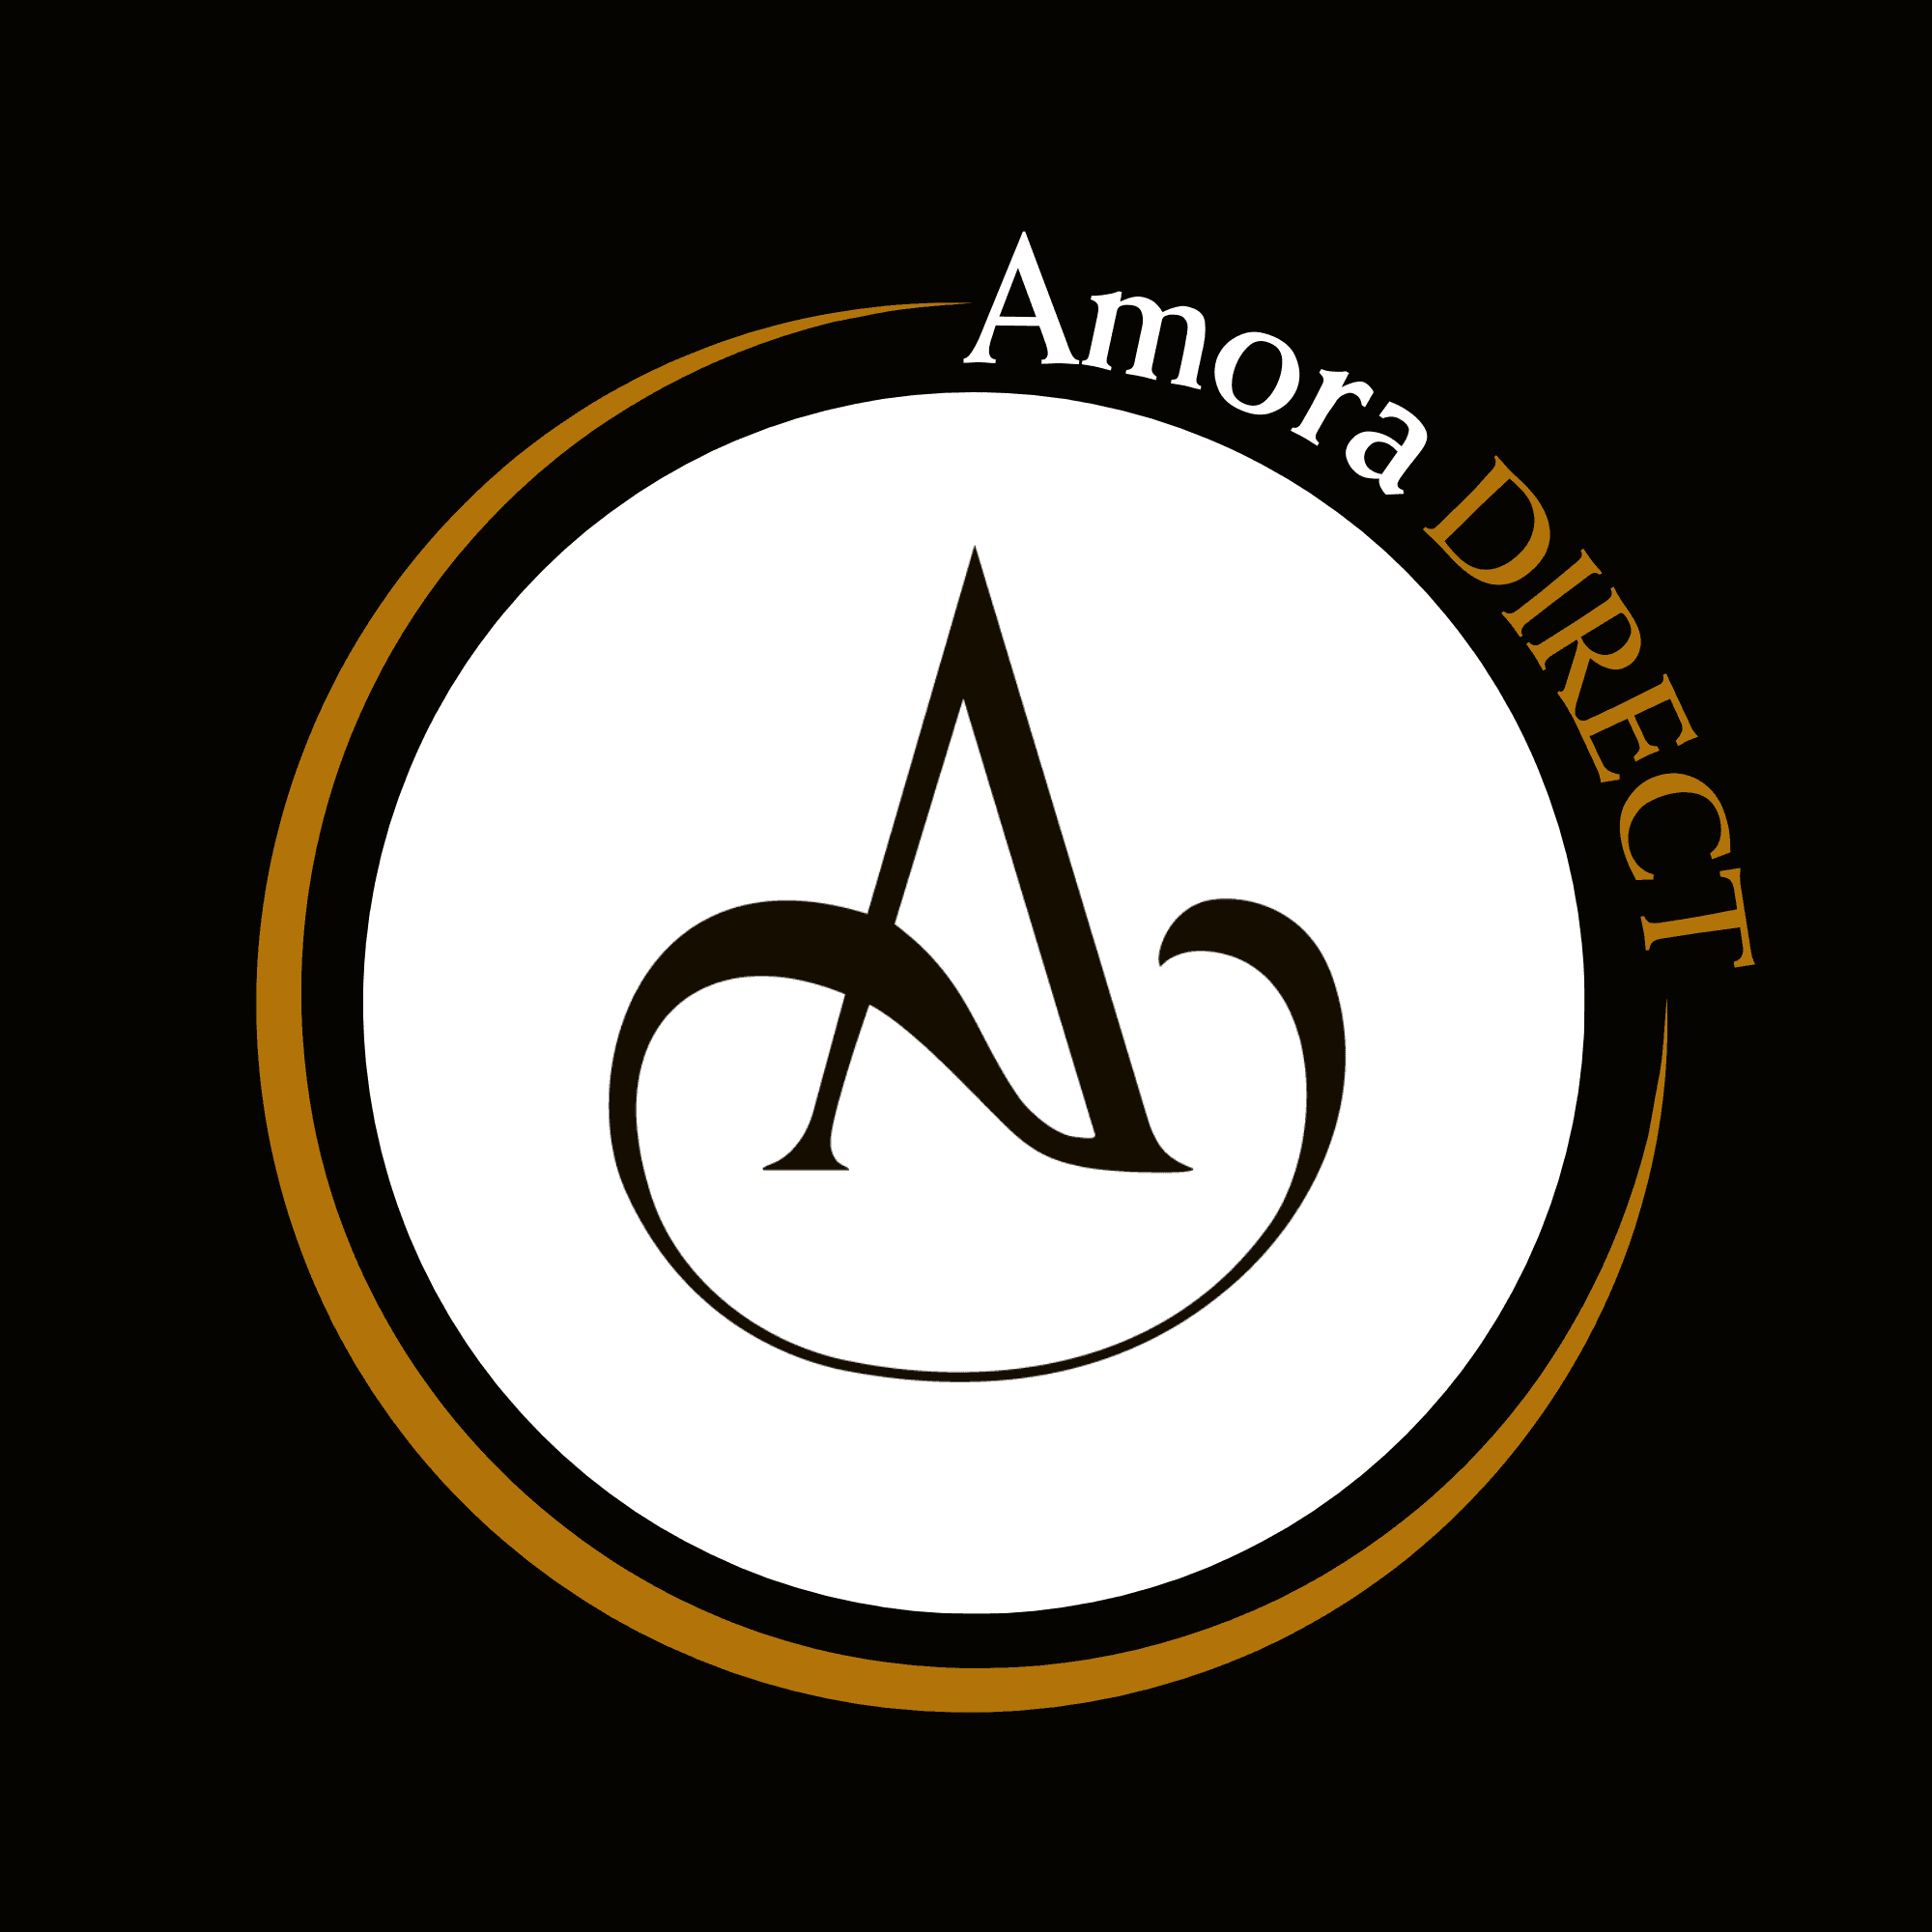 Amora DIRECT logo used at Amora Hotel